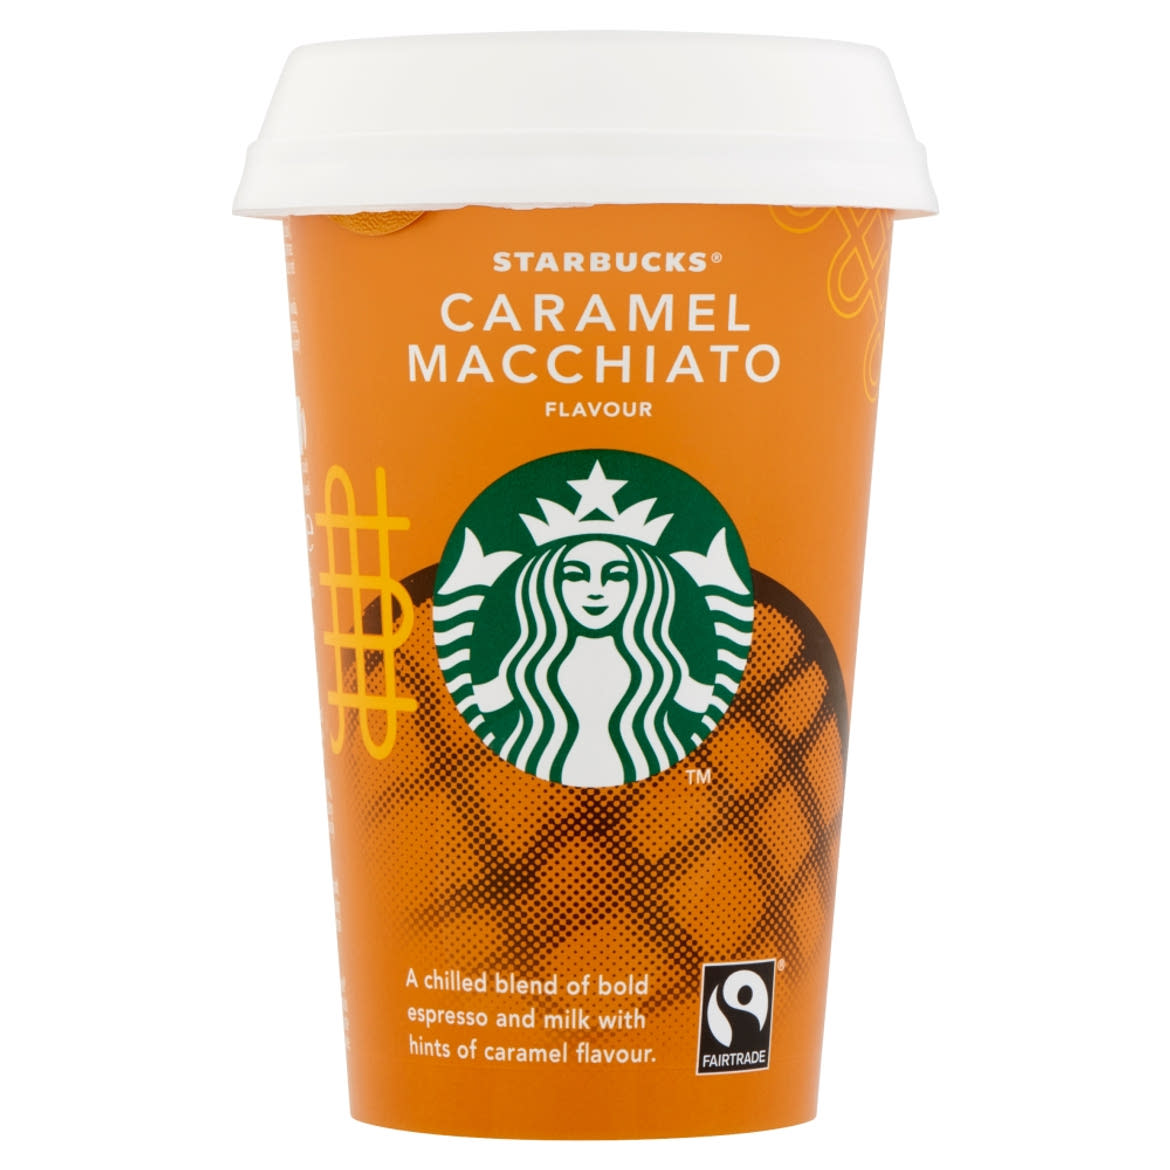 Starbucks Caramel Macchiato UHT kávés tejital